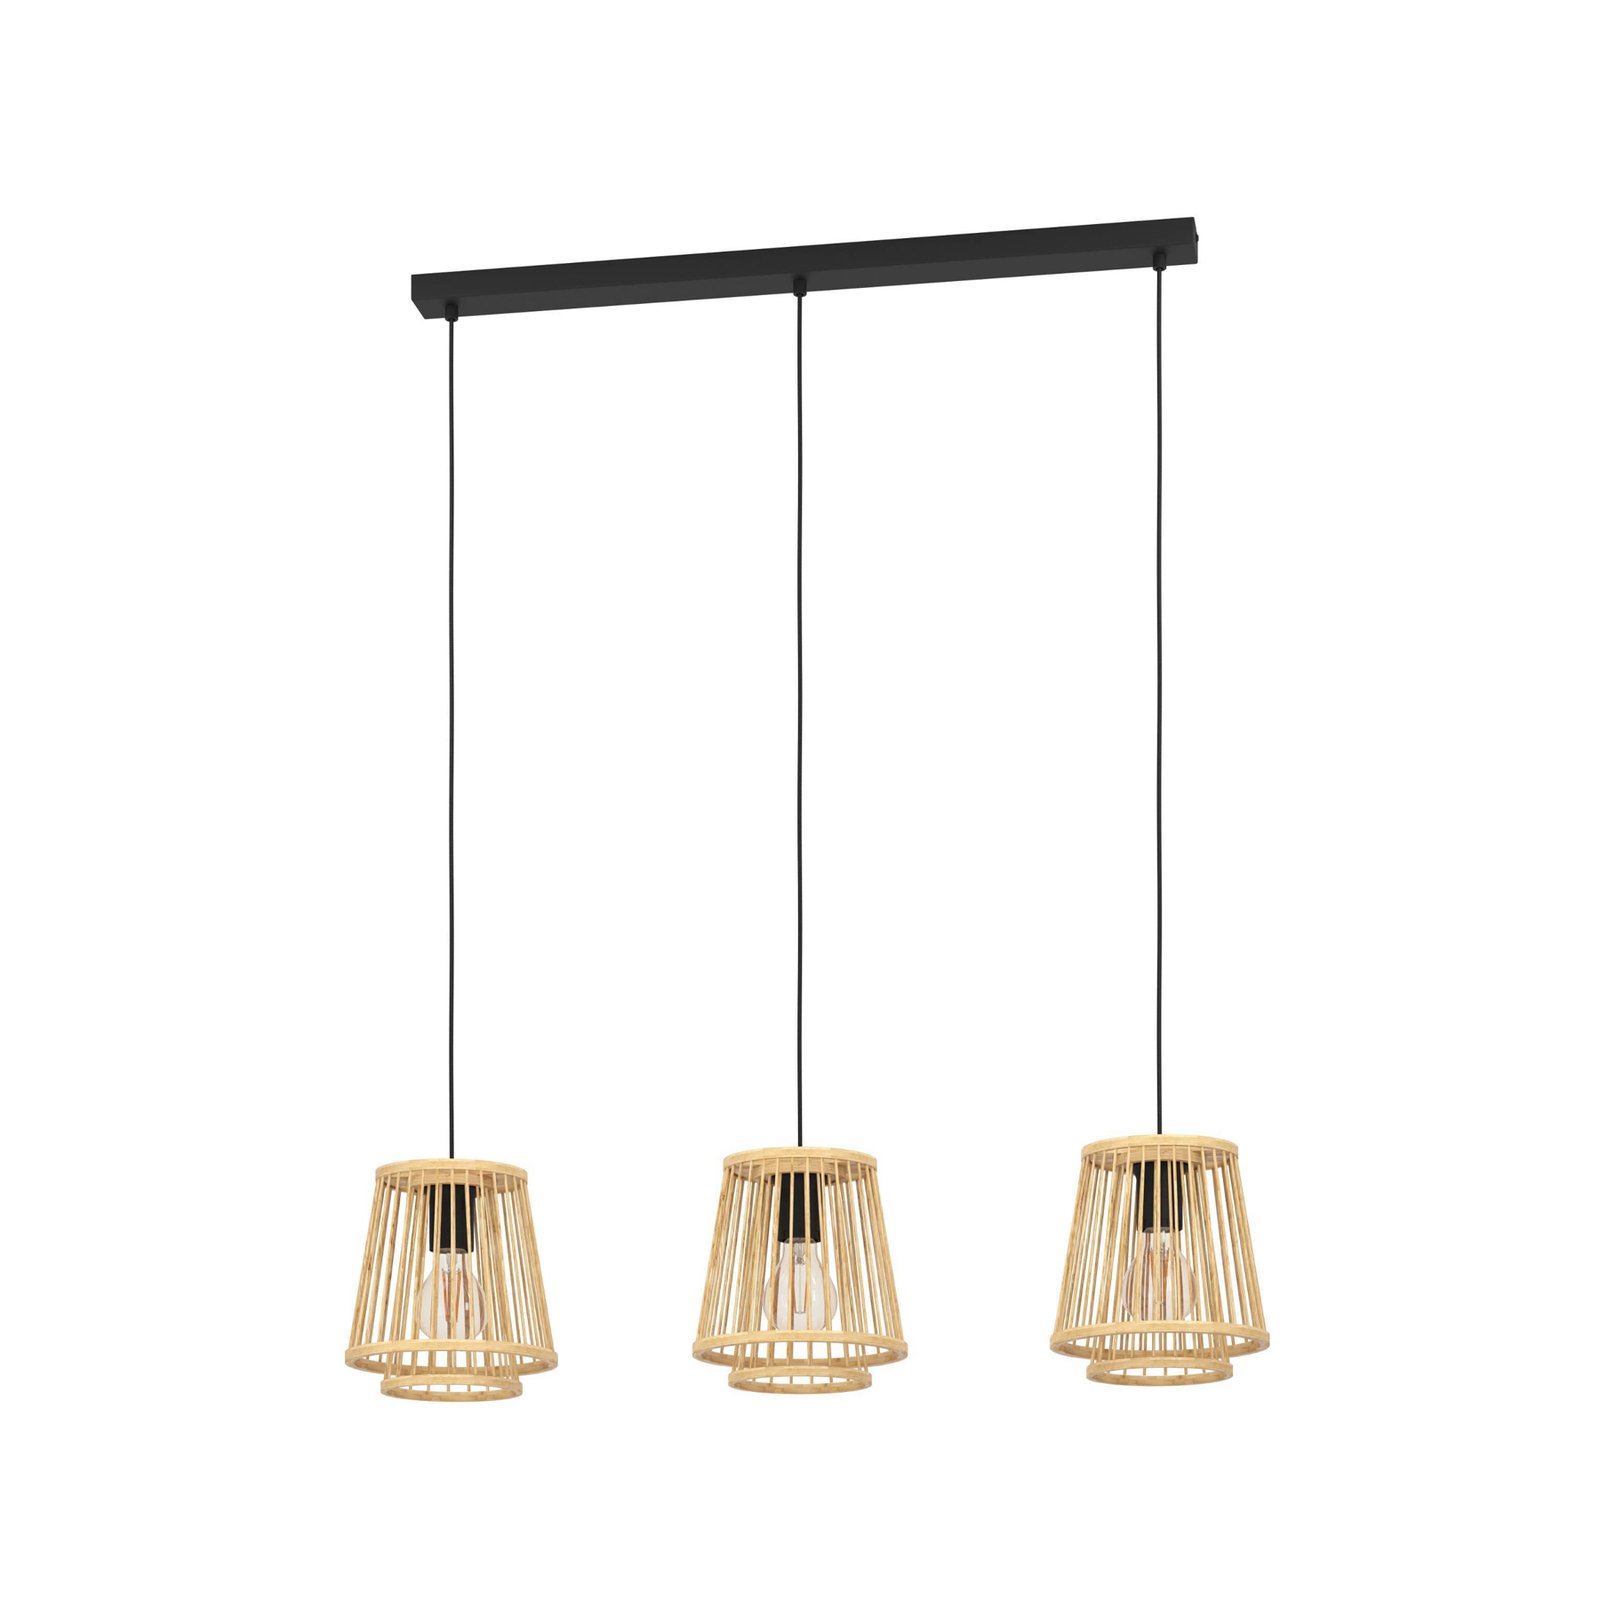 Viseća lampa Hykeham, dužina 91 cm, prirodna, 3 žarulje, bambus